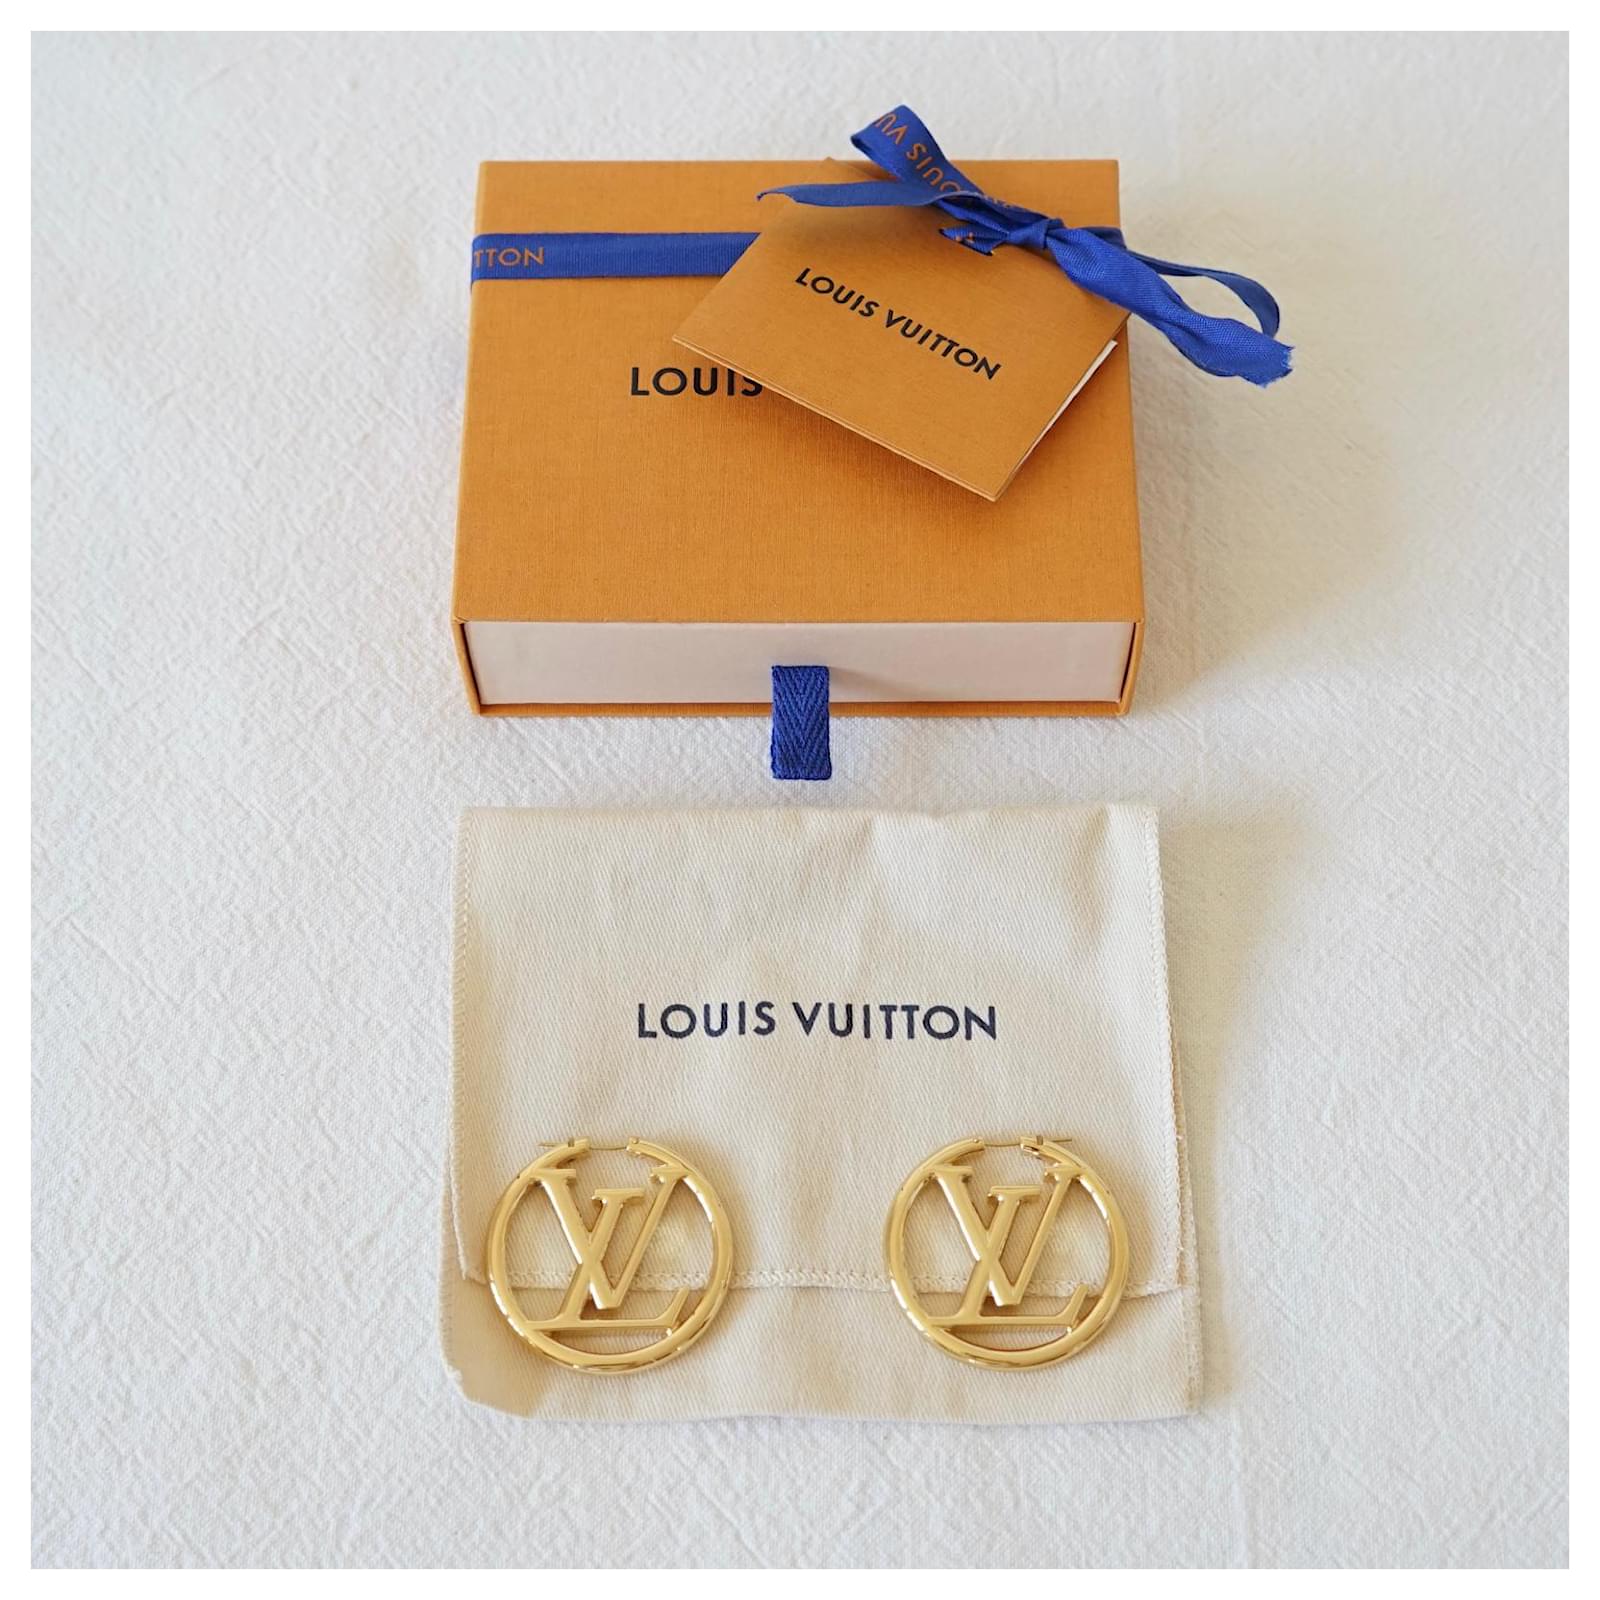 (verkauft) Louis Vuitton Ohrringe - Creolen Louise